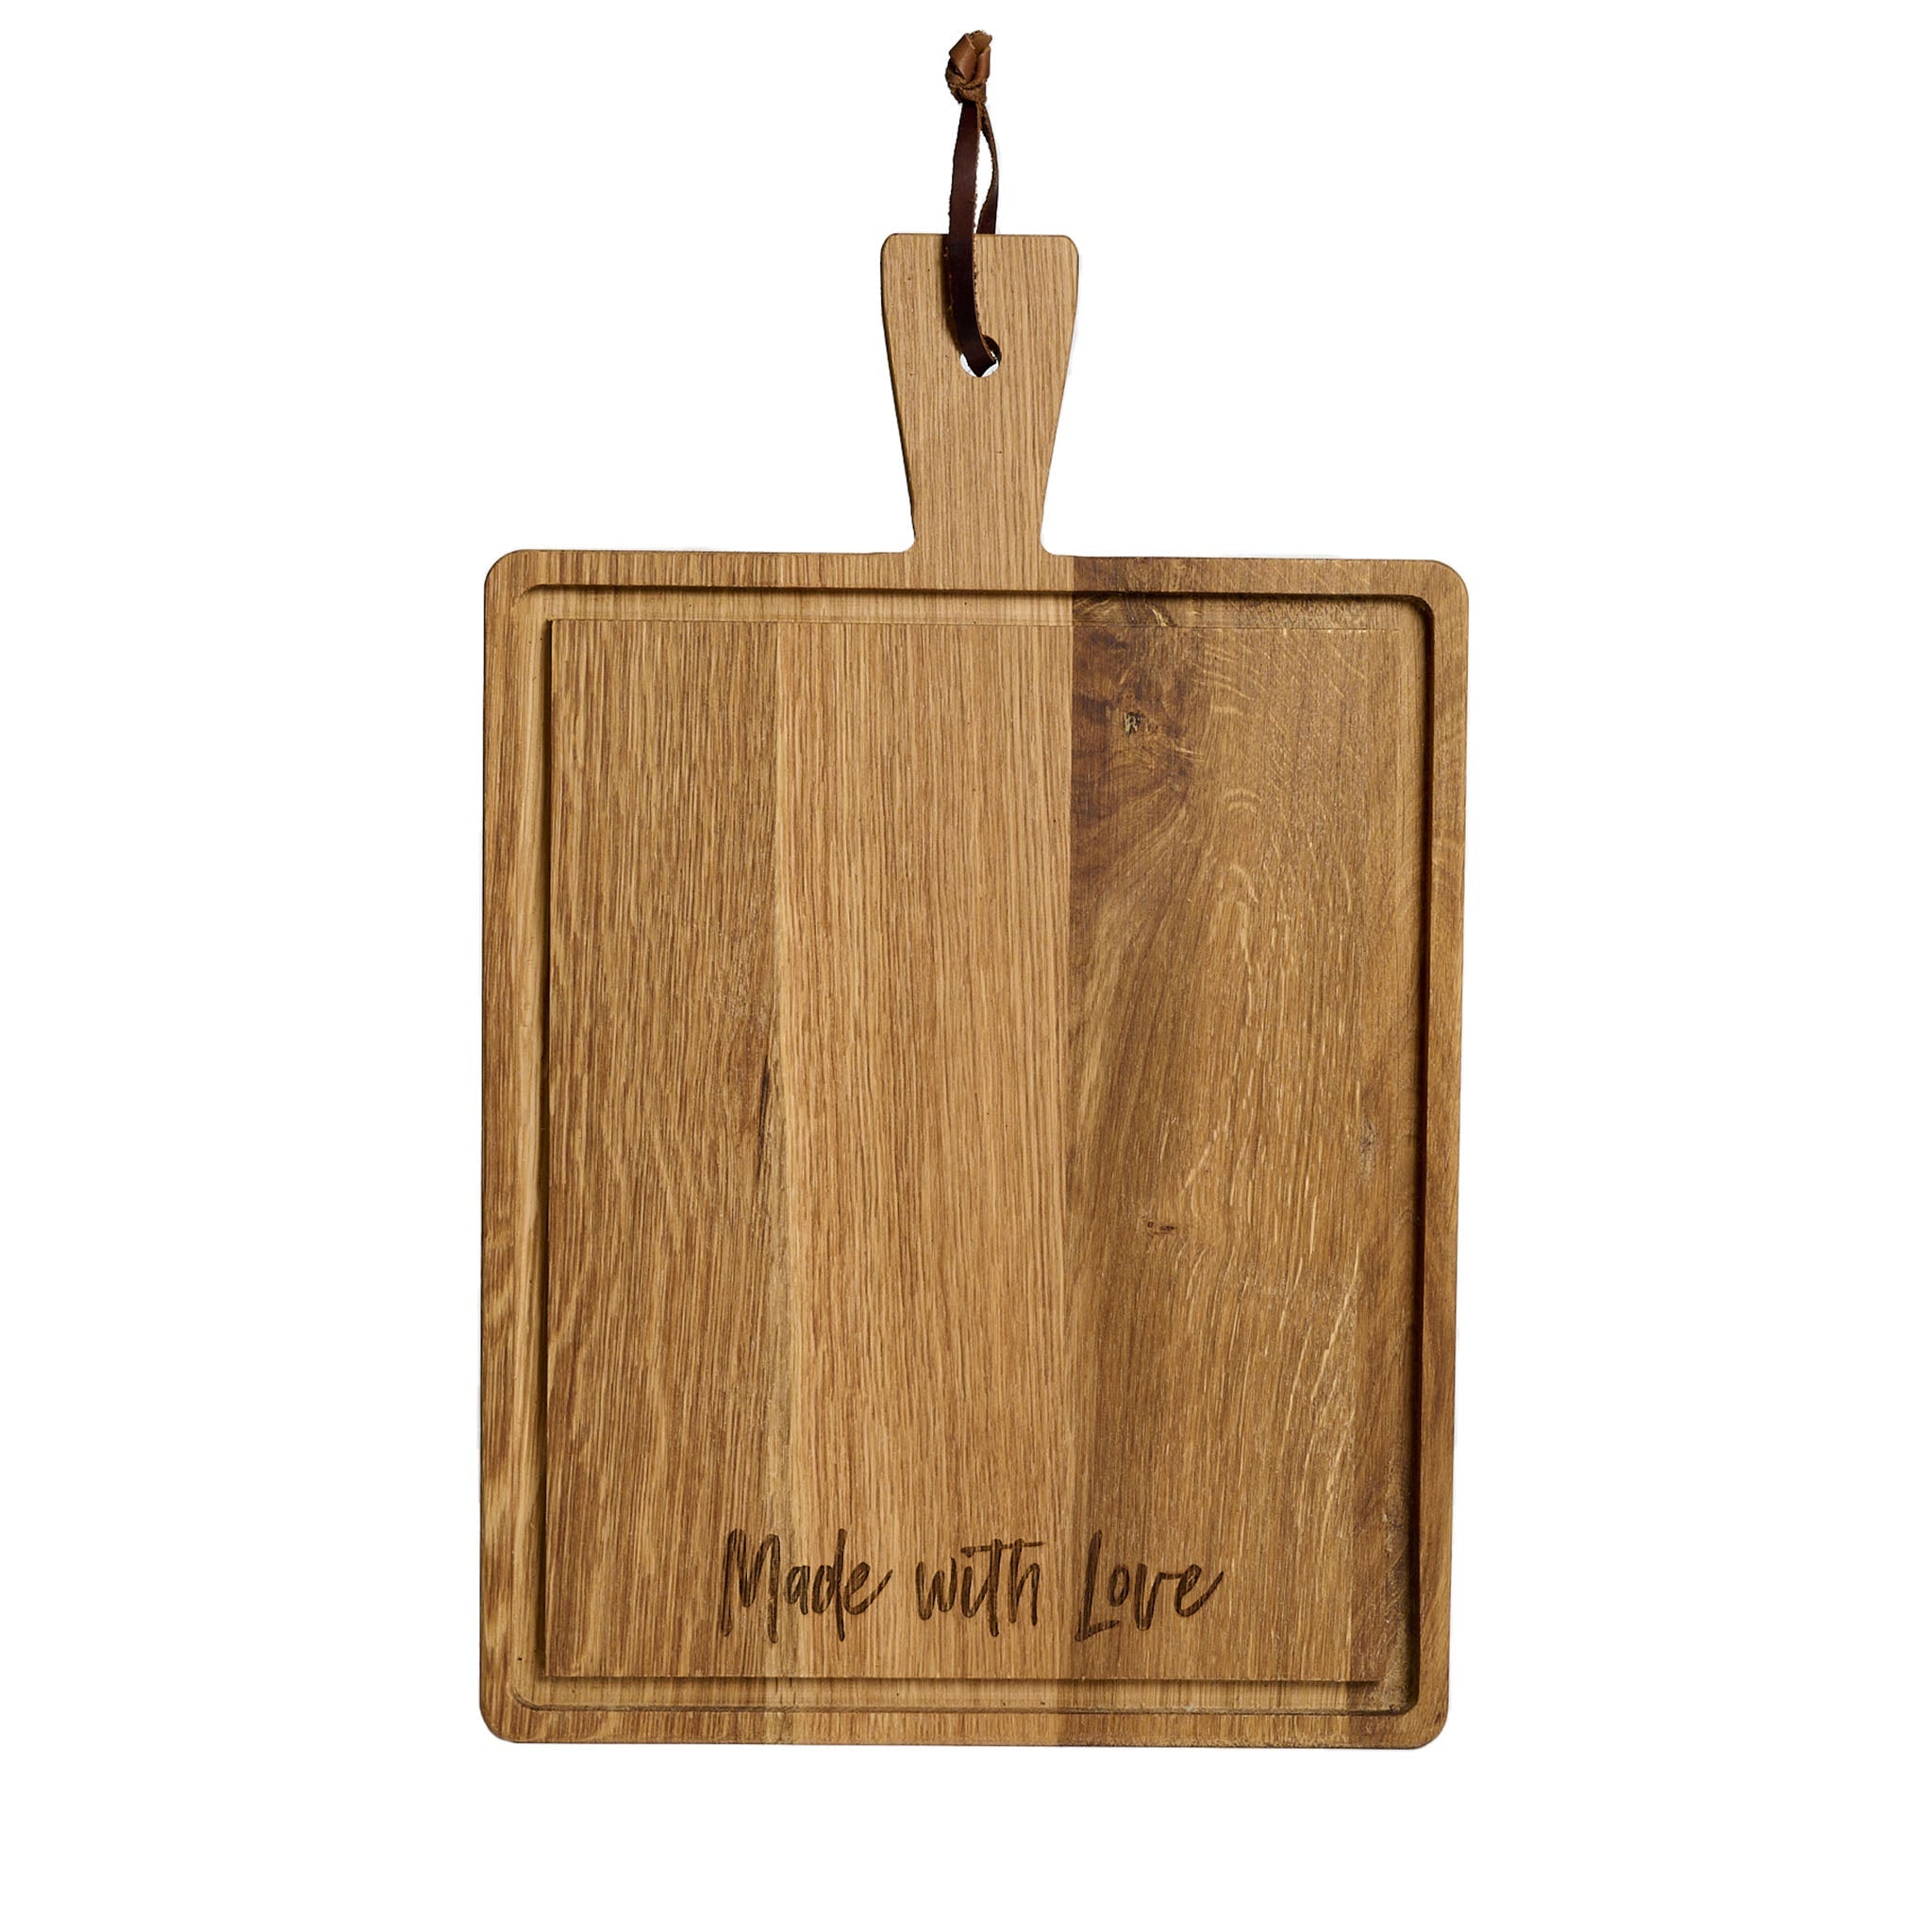 Rectangular cutting board made with love